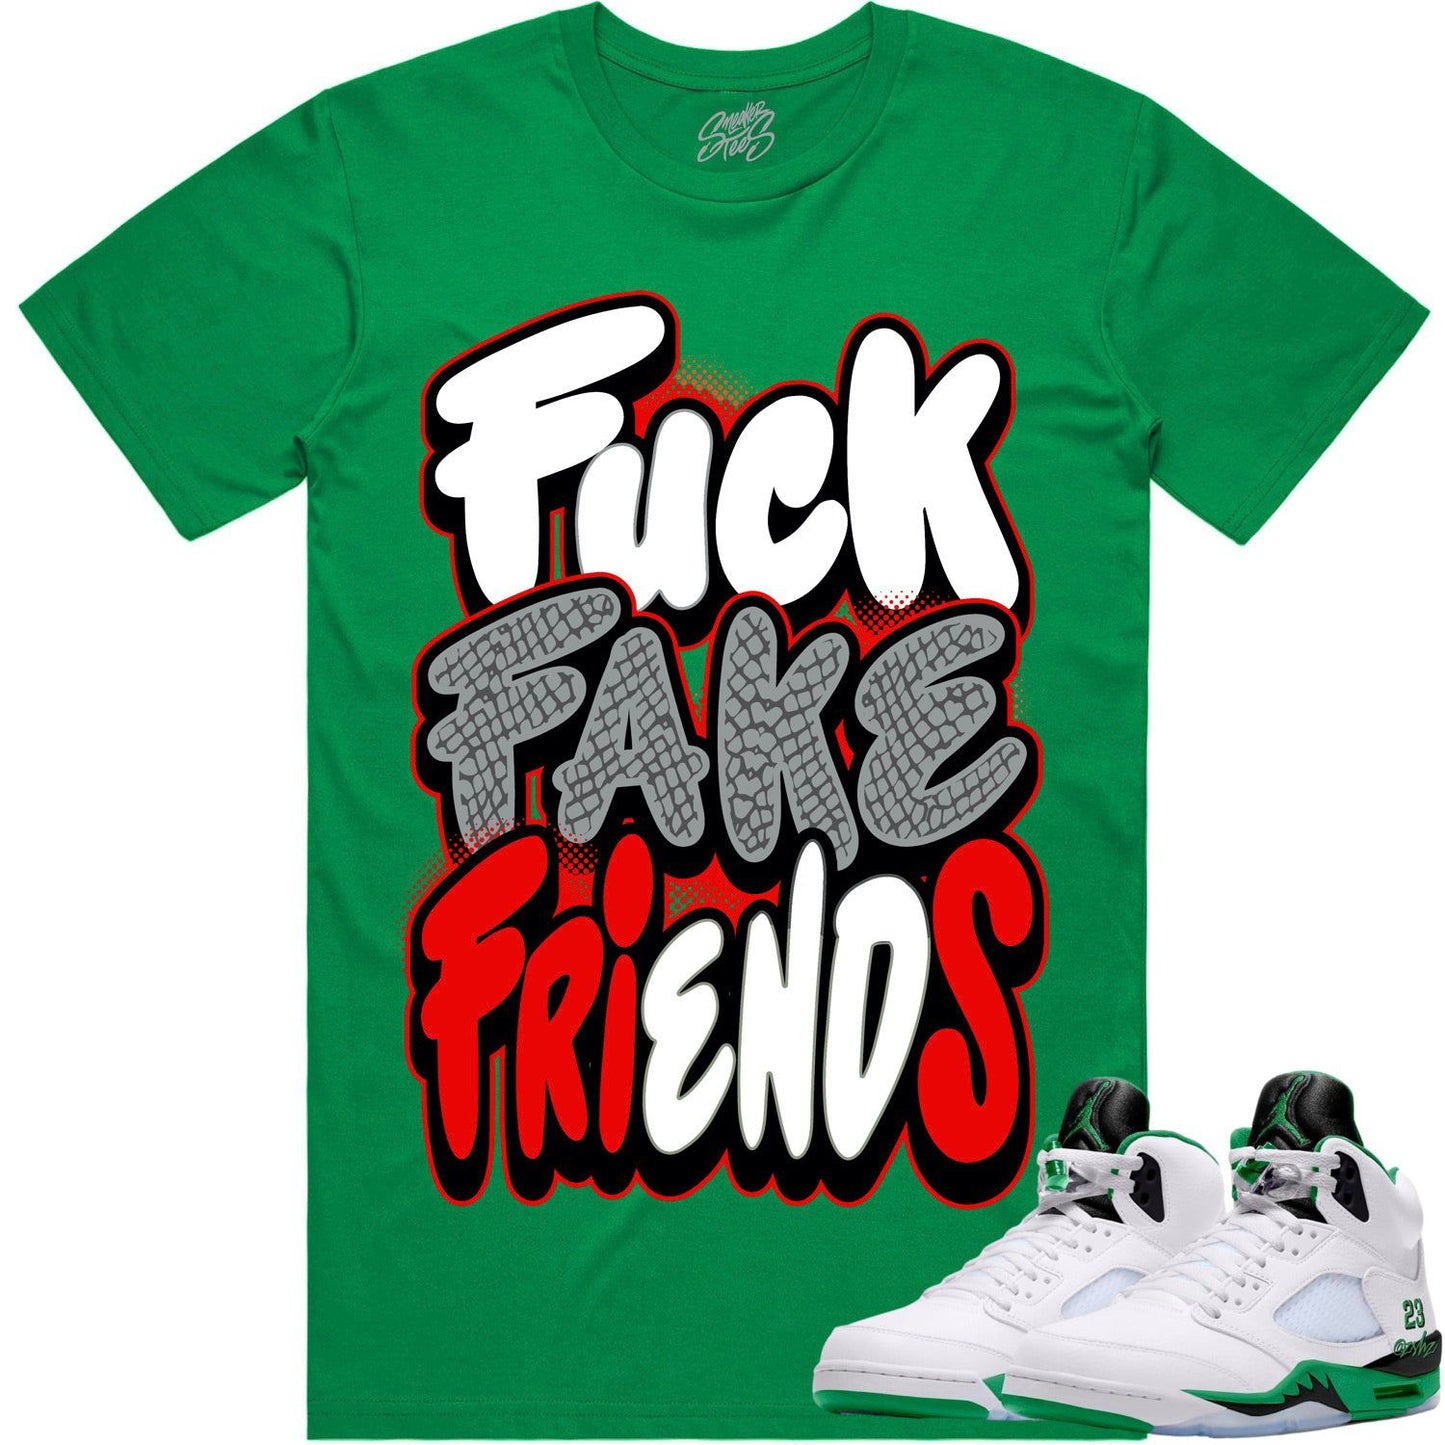 Jordan 5 Lucky Green 5s Shirt - Sneaker Tees - Money over Fame